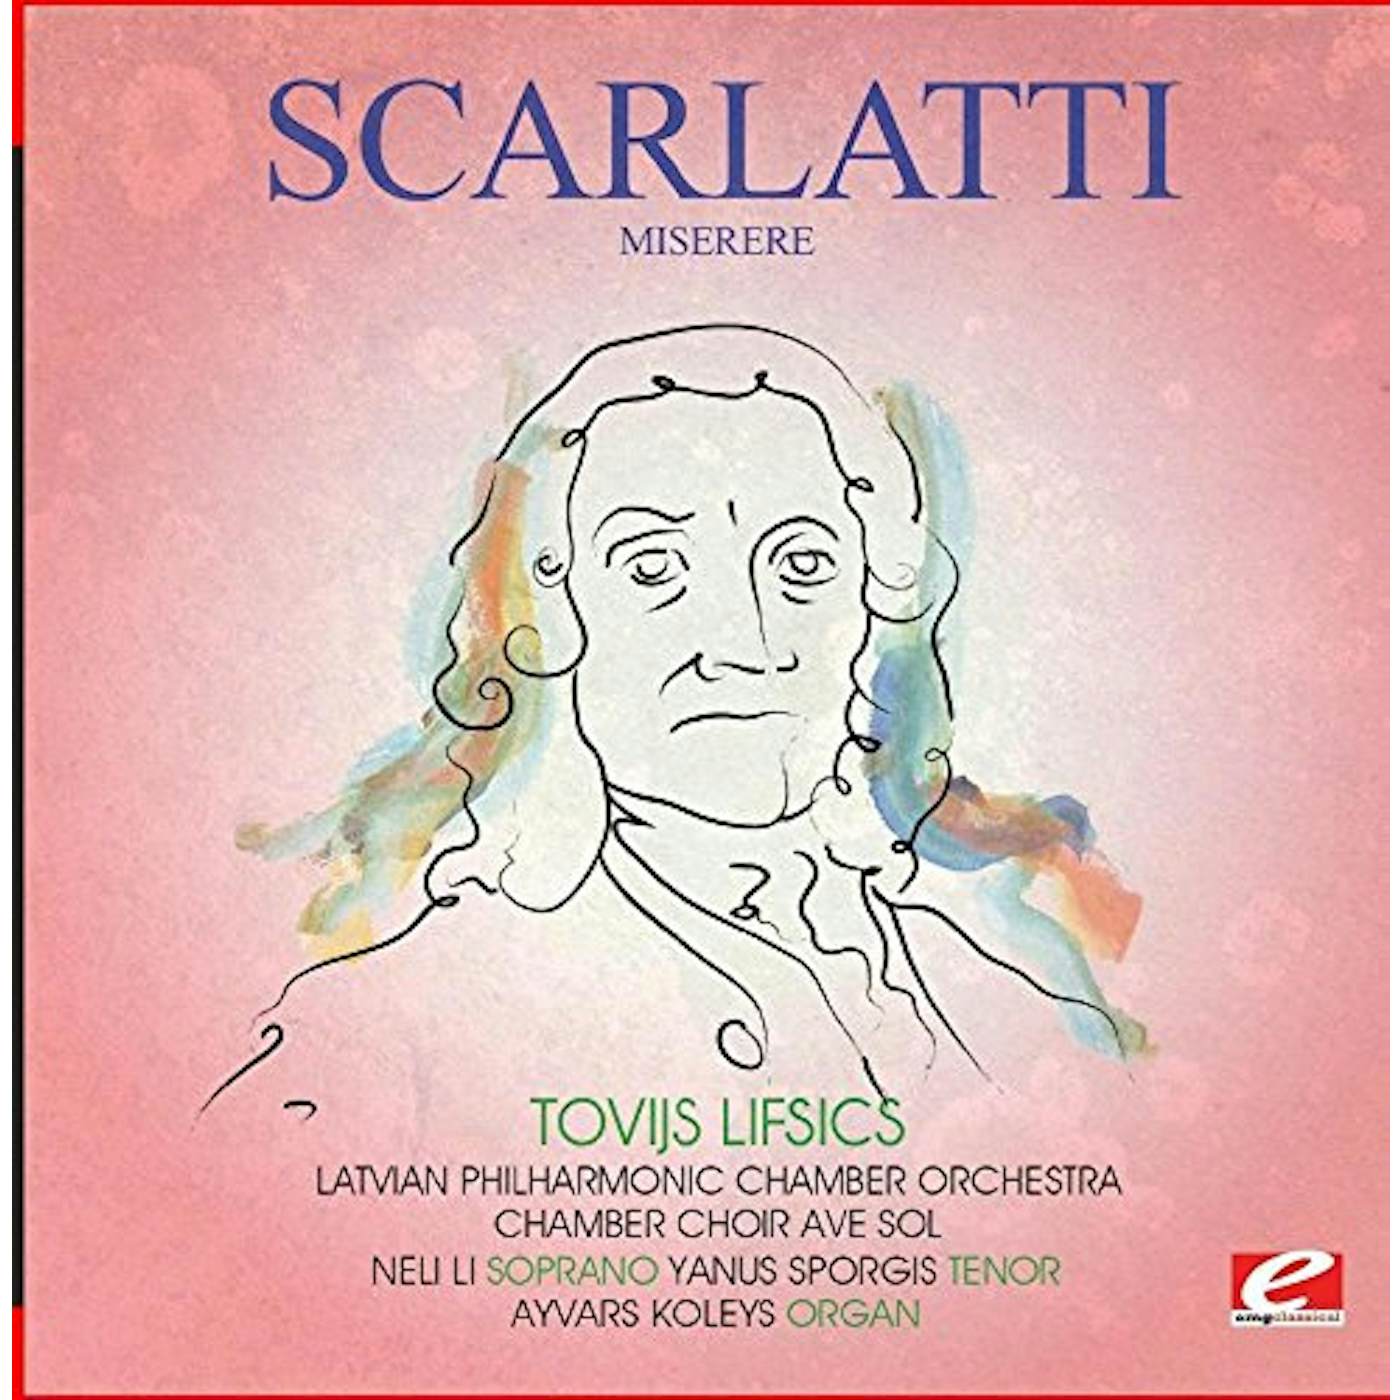 Scarlatti MISERERE CD